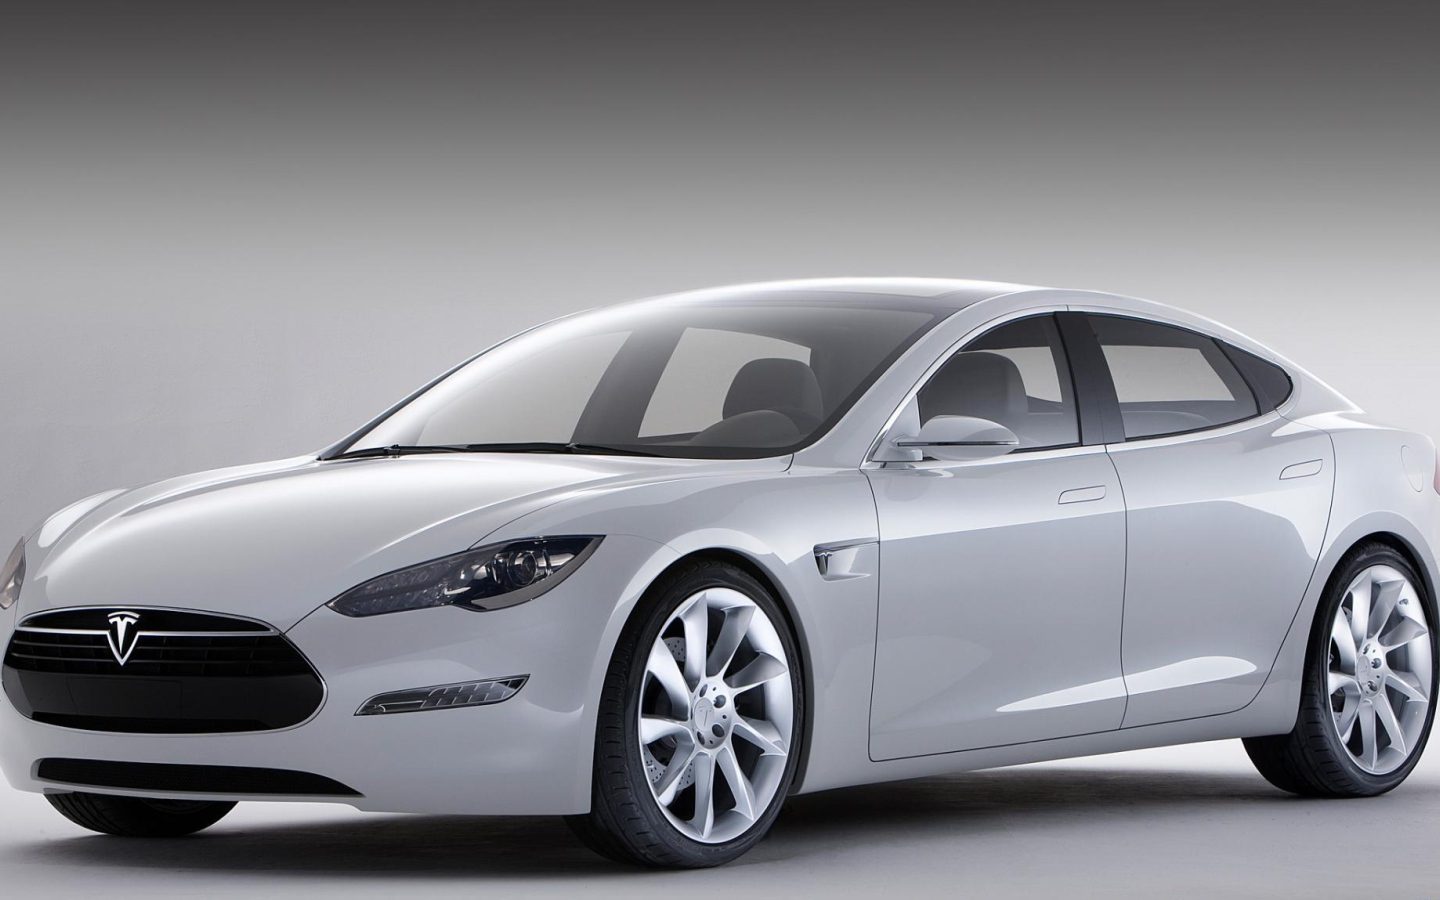 Silver electric Tesla Model S